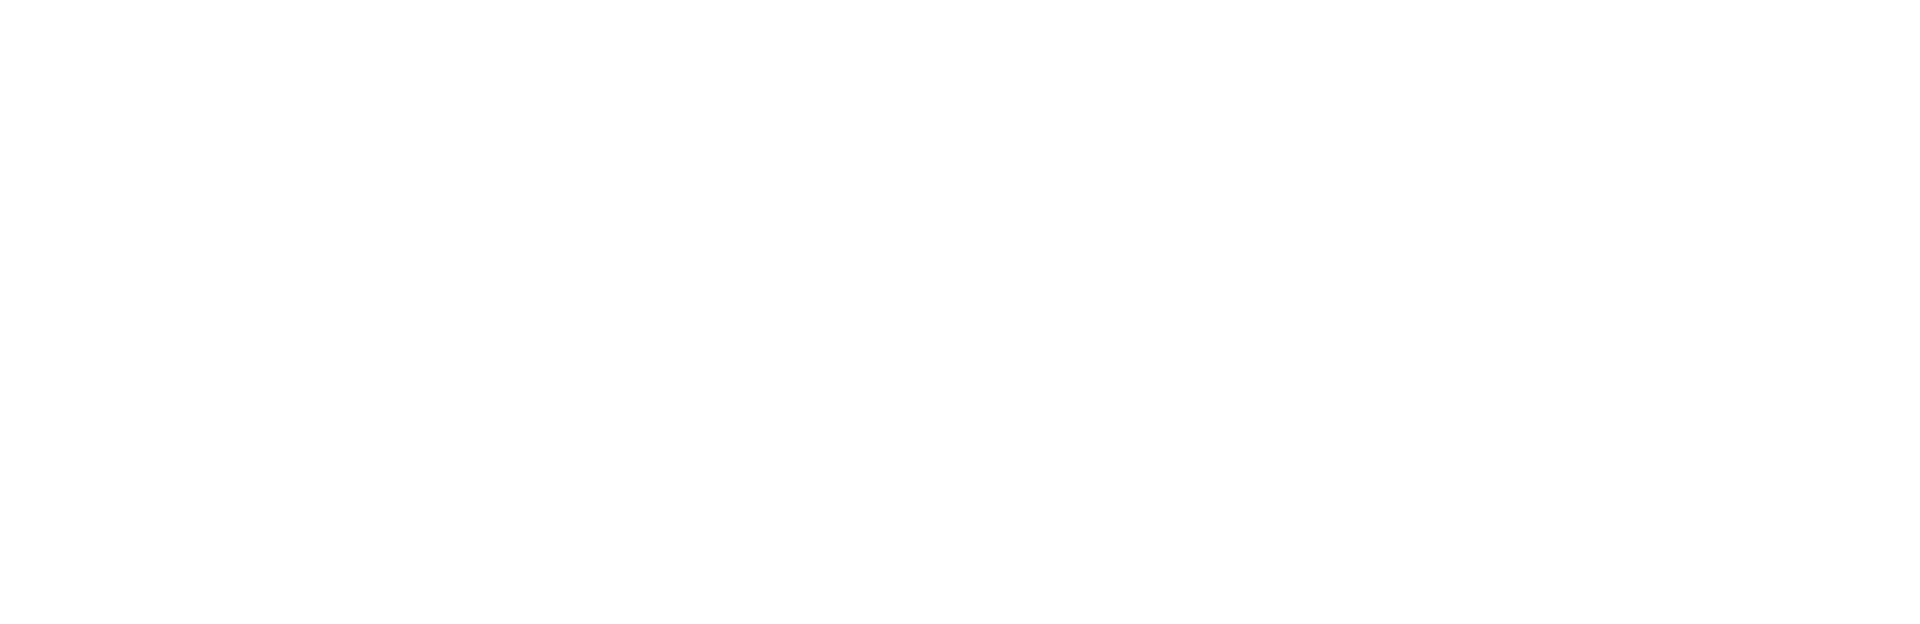 Rebel One Logo wit cropped